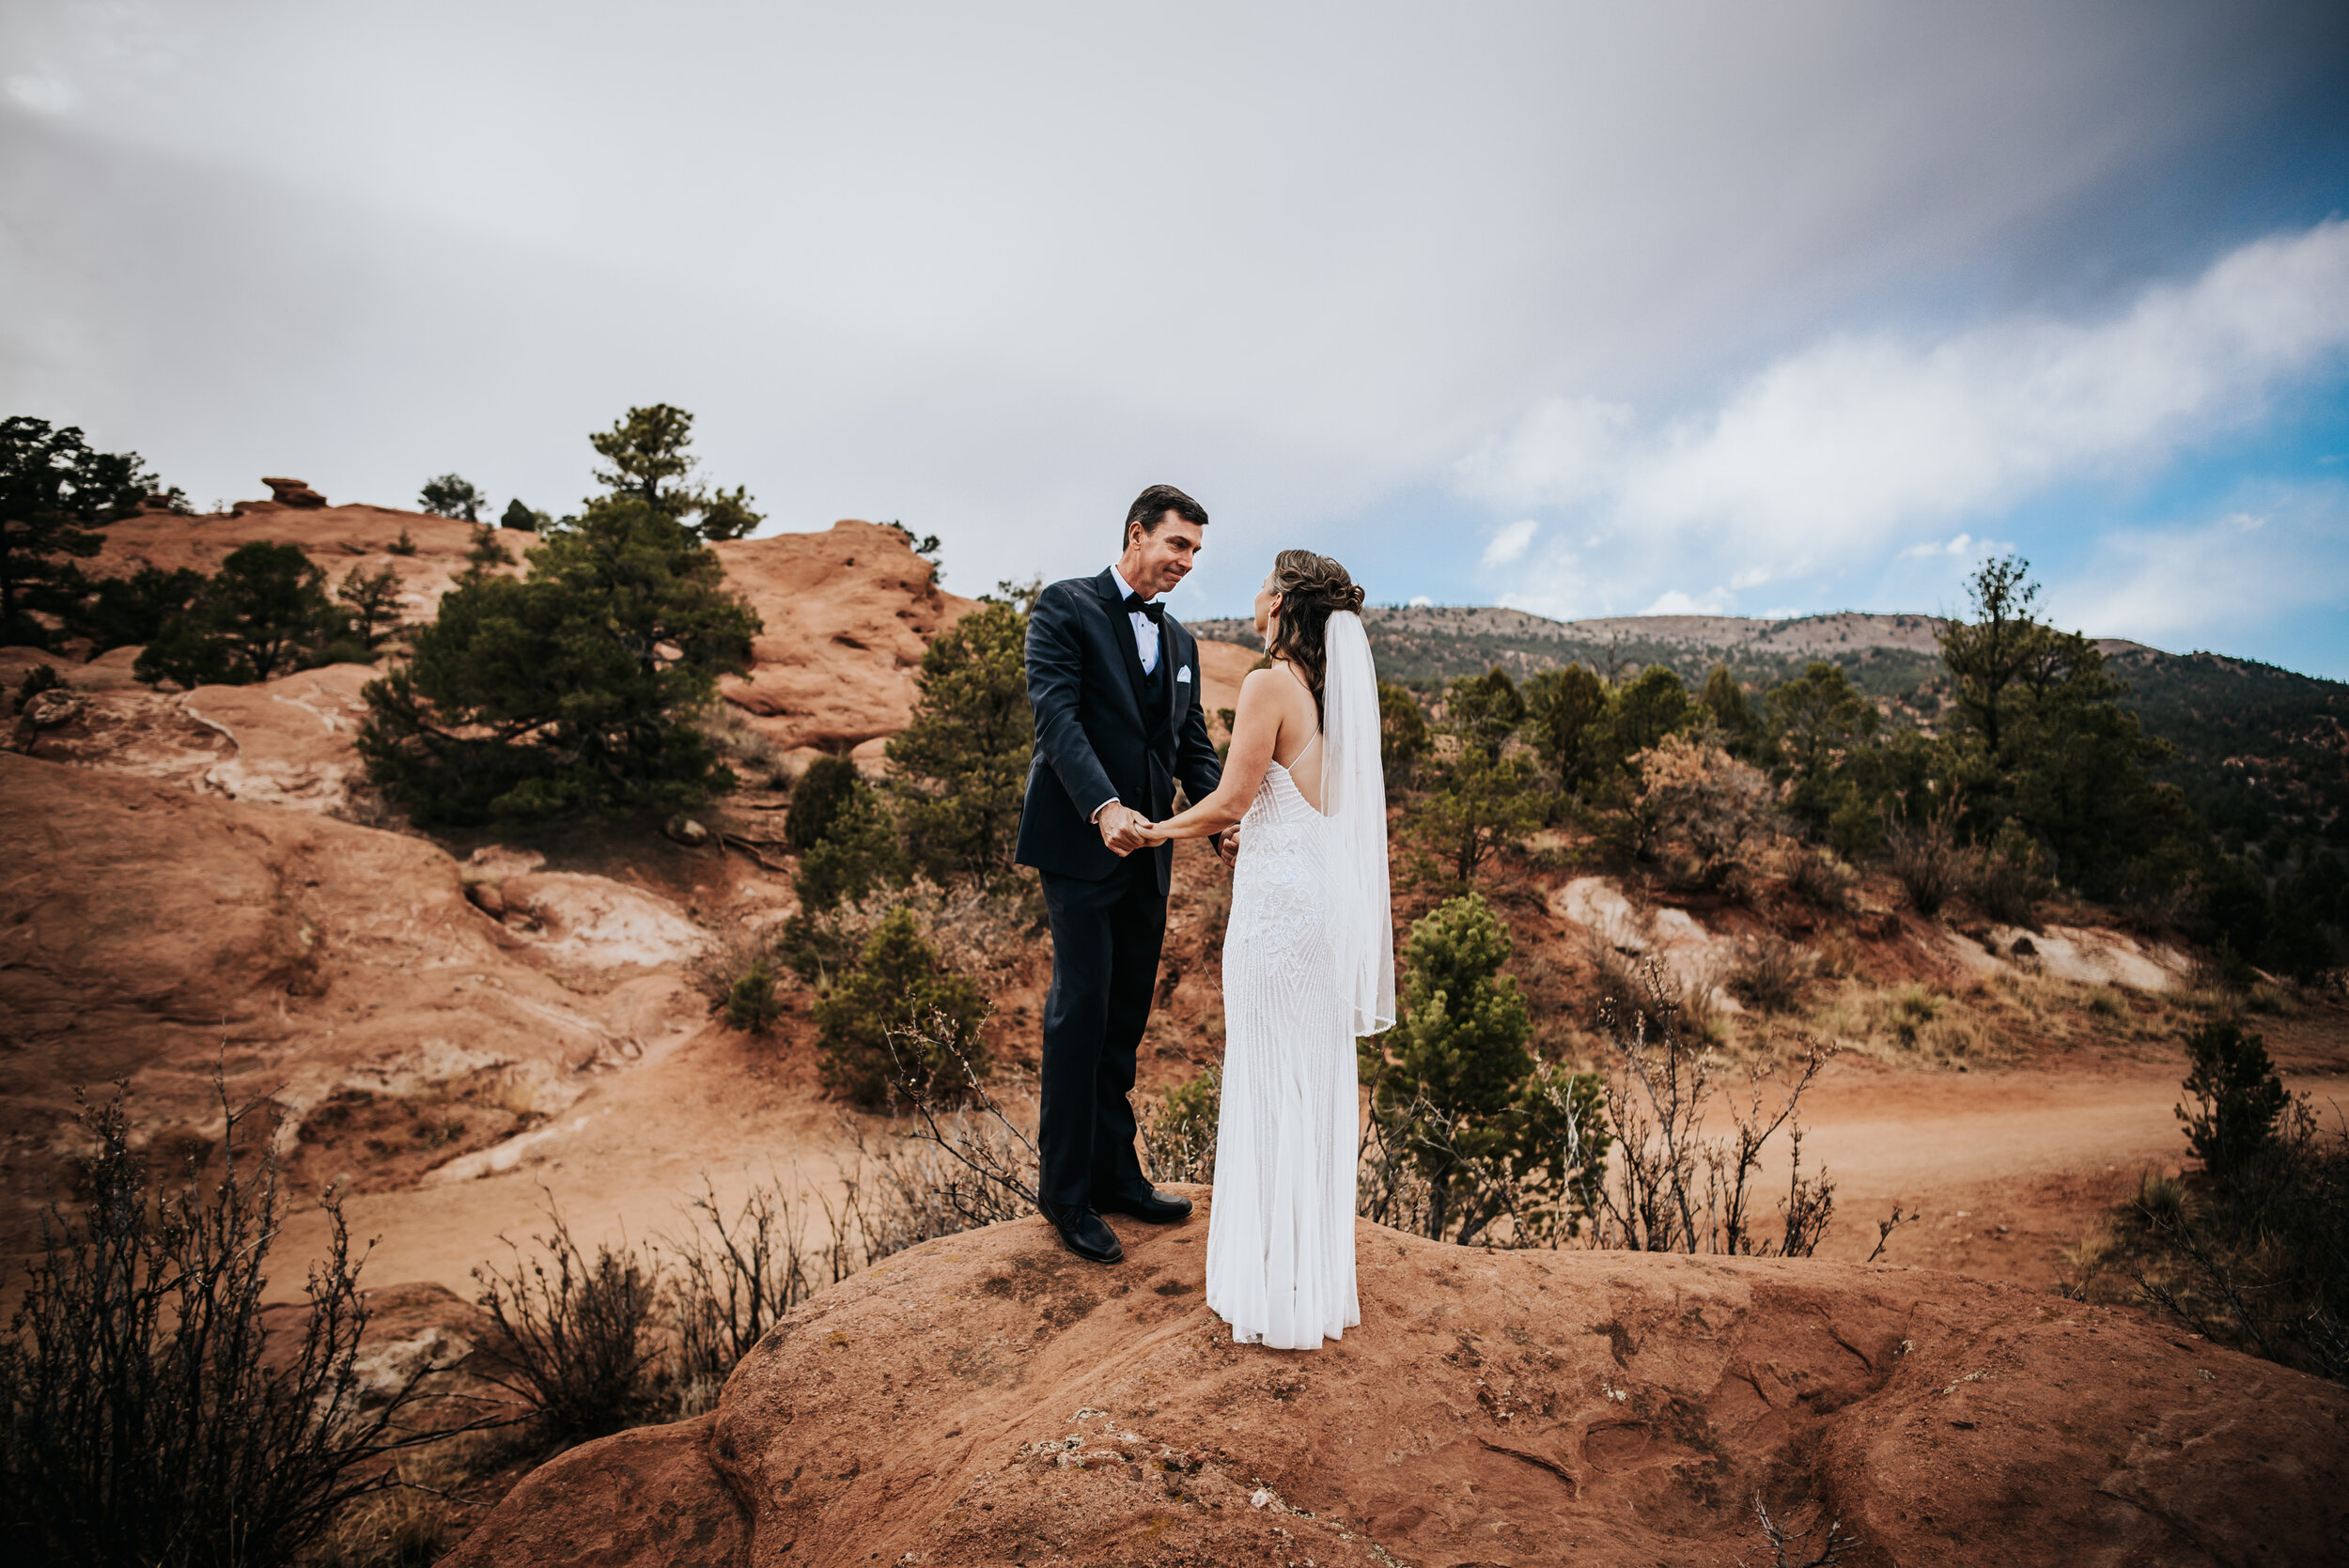 Jen Mountain Elopement Colorado Springs Sunset Garden of the Gods Husband Wife Wild Prairie Photography-2-2021.jpg